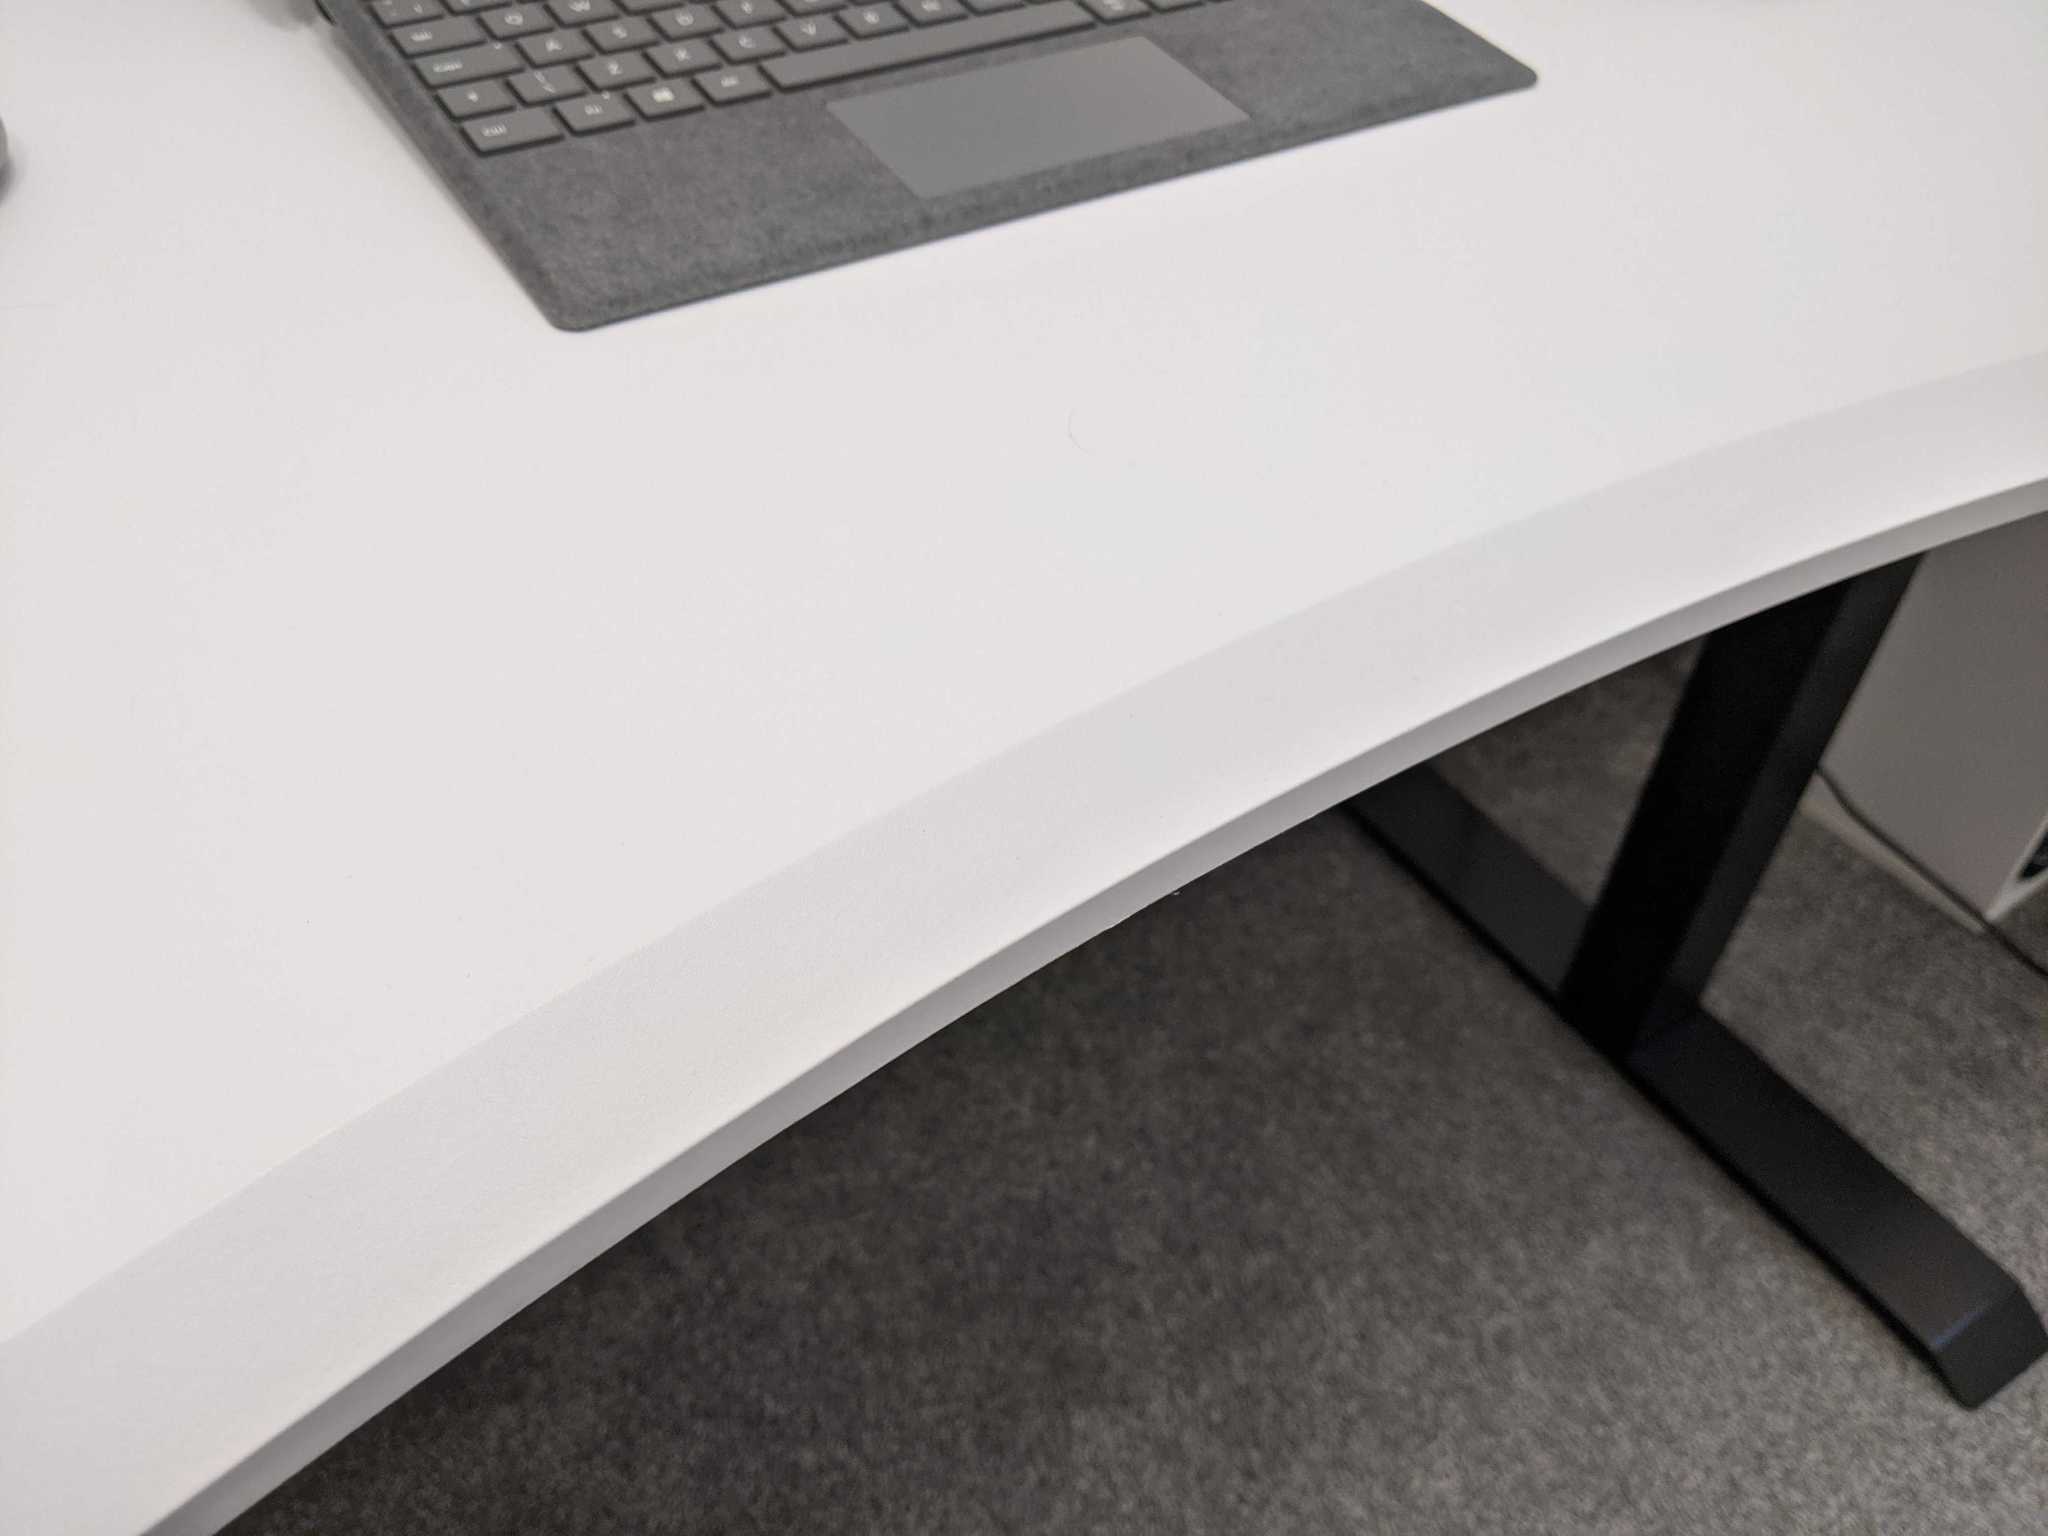 FlexiSpot E6 standing desk review: This impressive standing desk even